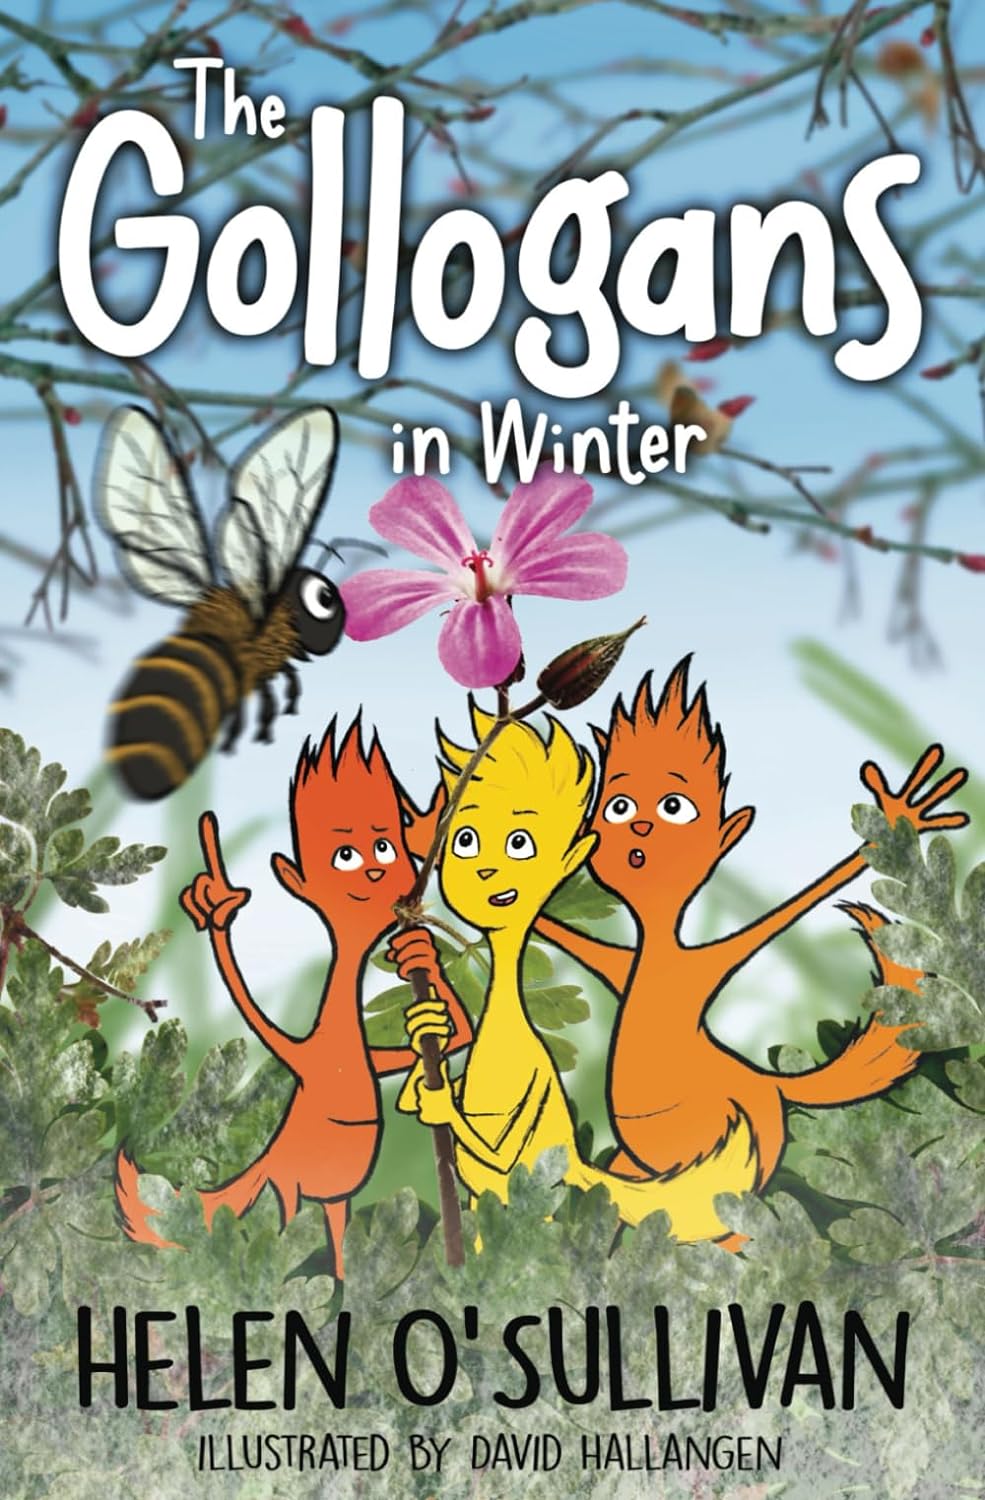 Helen O'Sullivan: The Gollogans in Winter, illustrated by David Hallangen